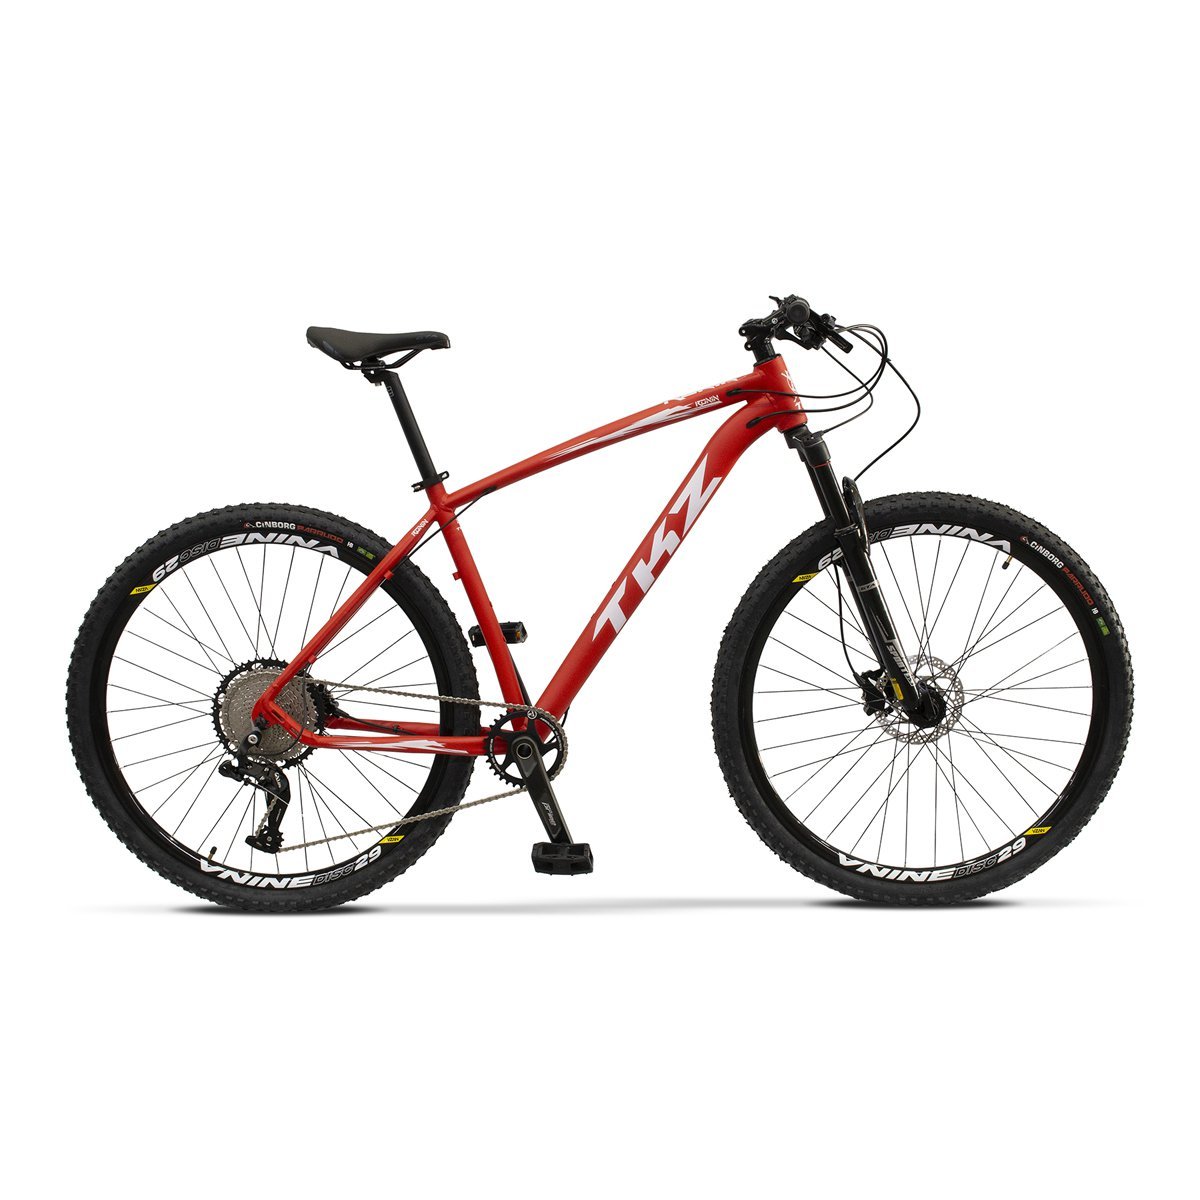 Bicicleta TKZ Ronin Absolut 12V Quadro 19" Alumínio Aro 29 - Vermelho - Quadro 19